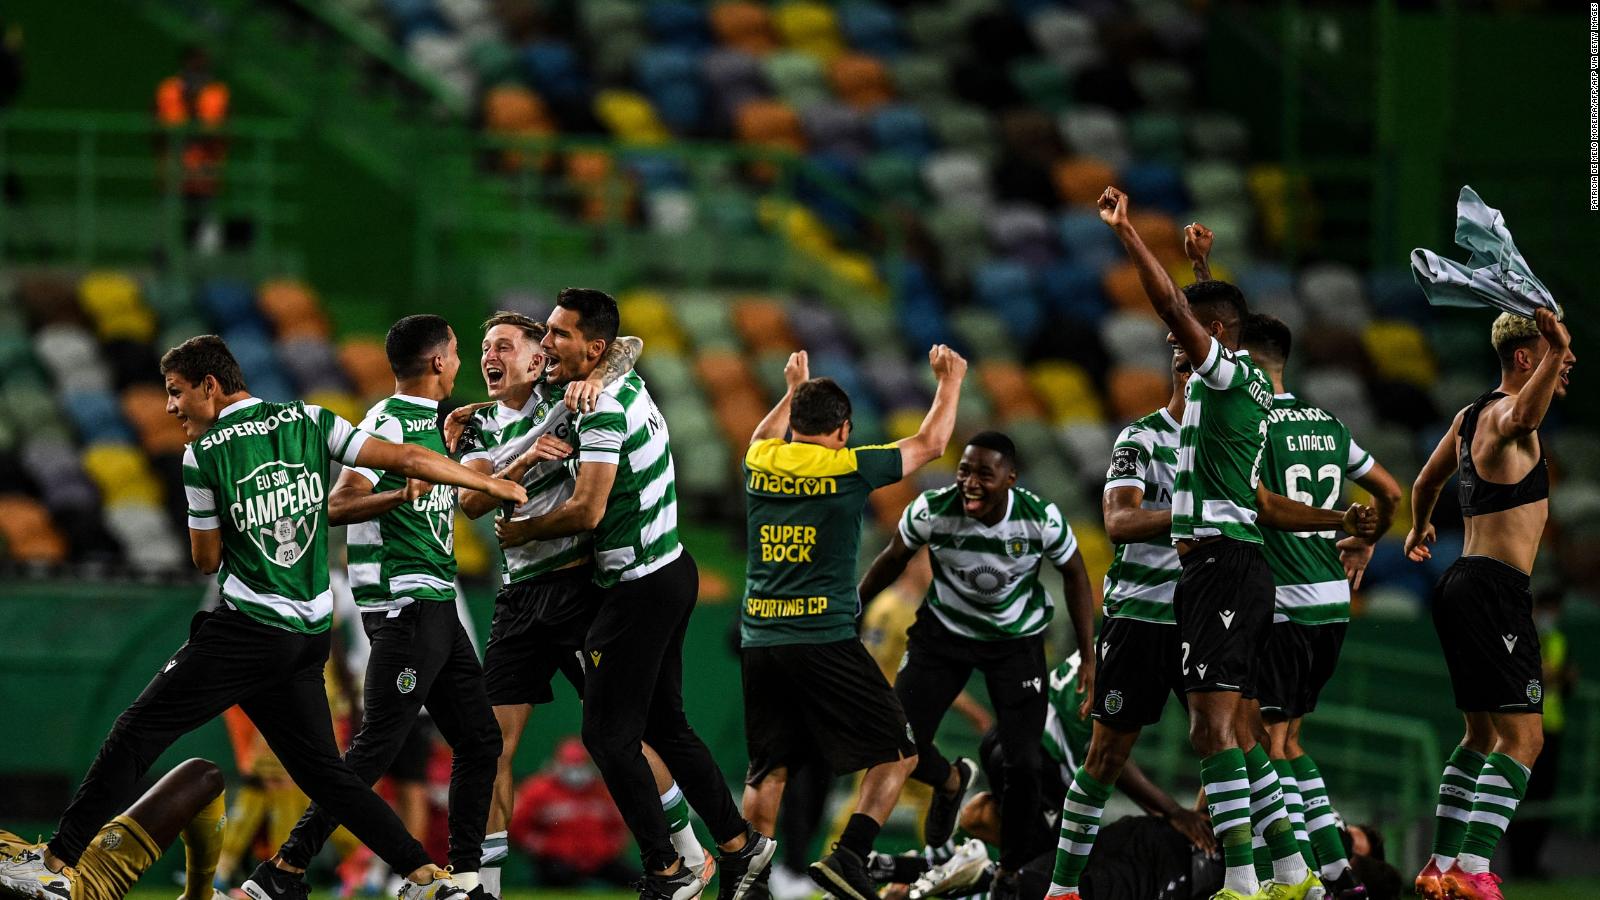 Sporting Lisbon's bittersweet title win after 19 years of hurt - CNN